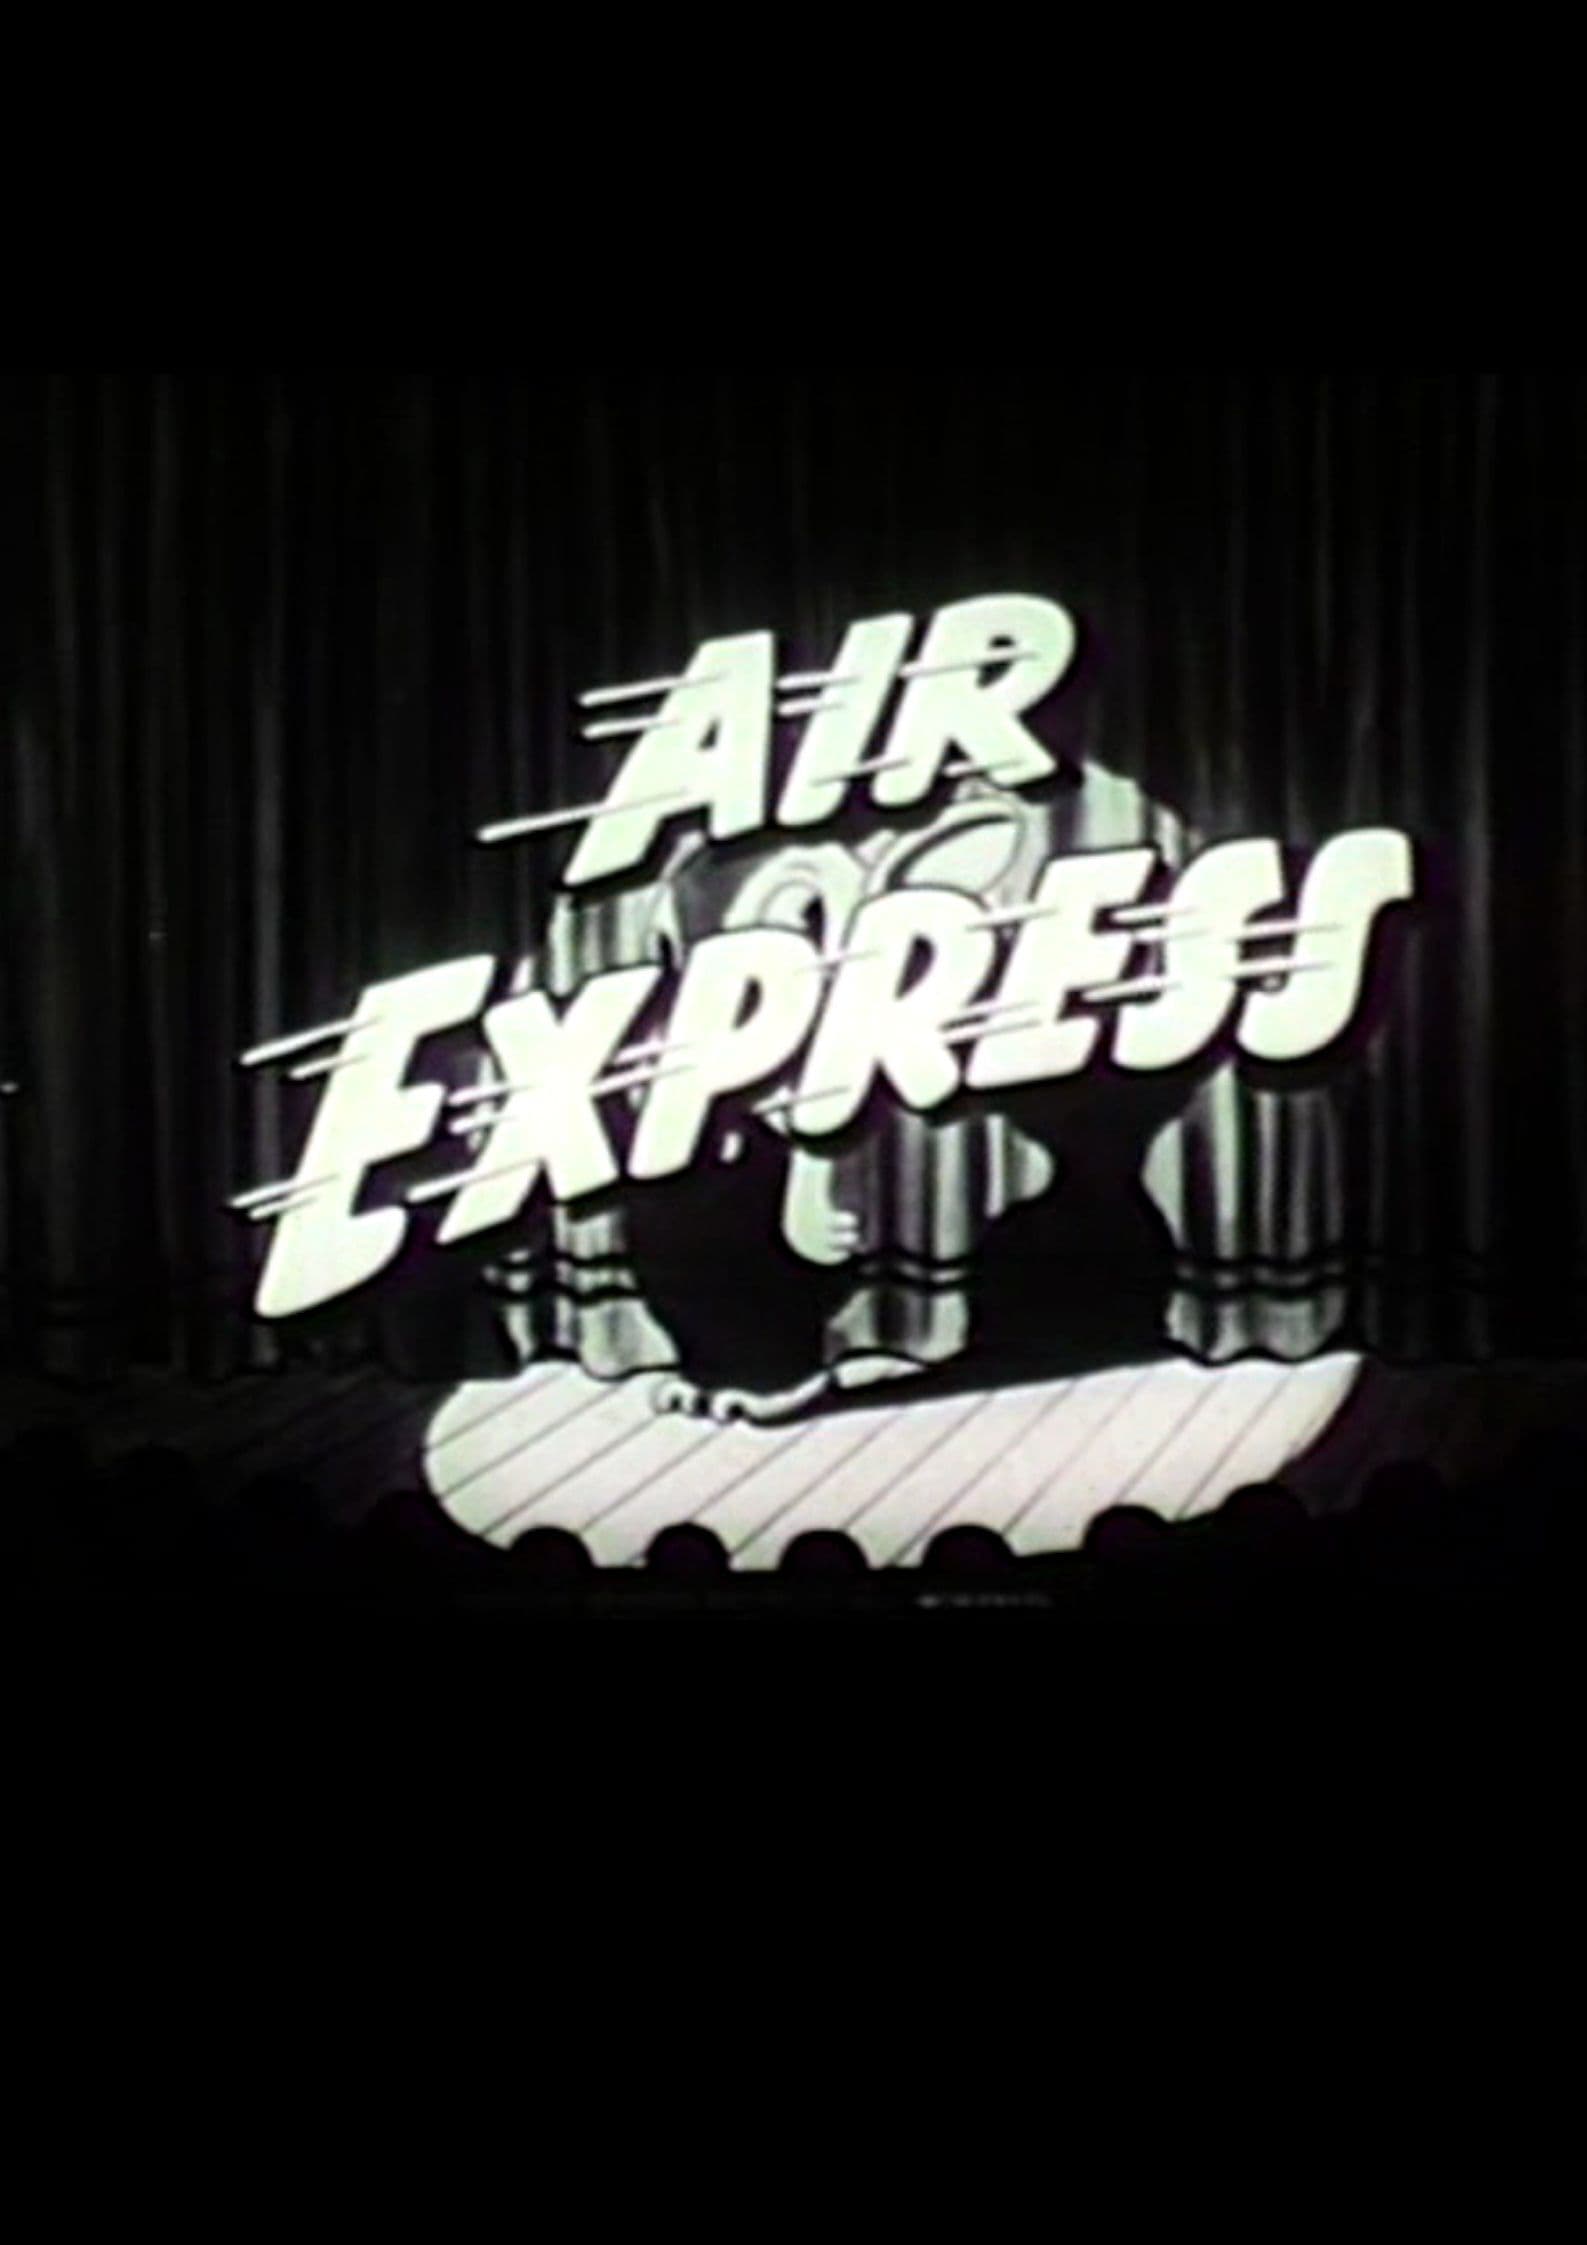 The Air Express